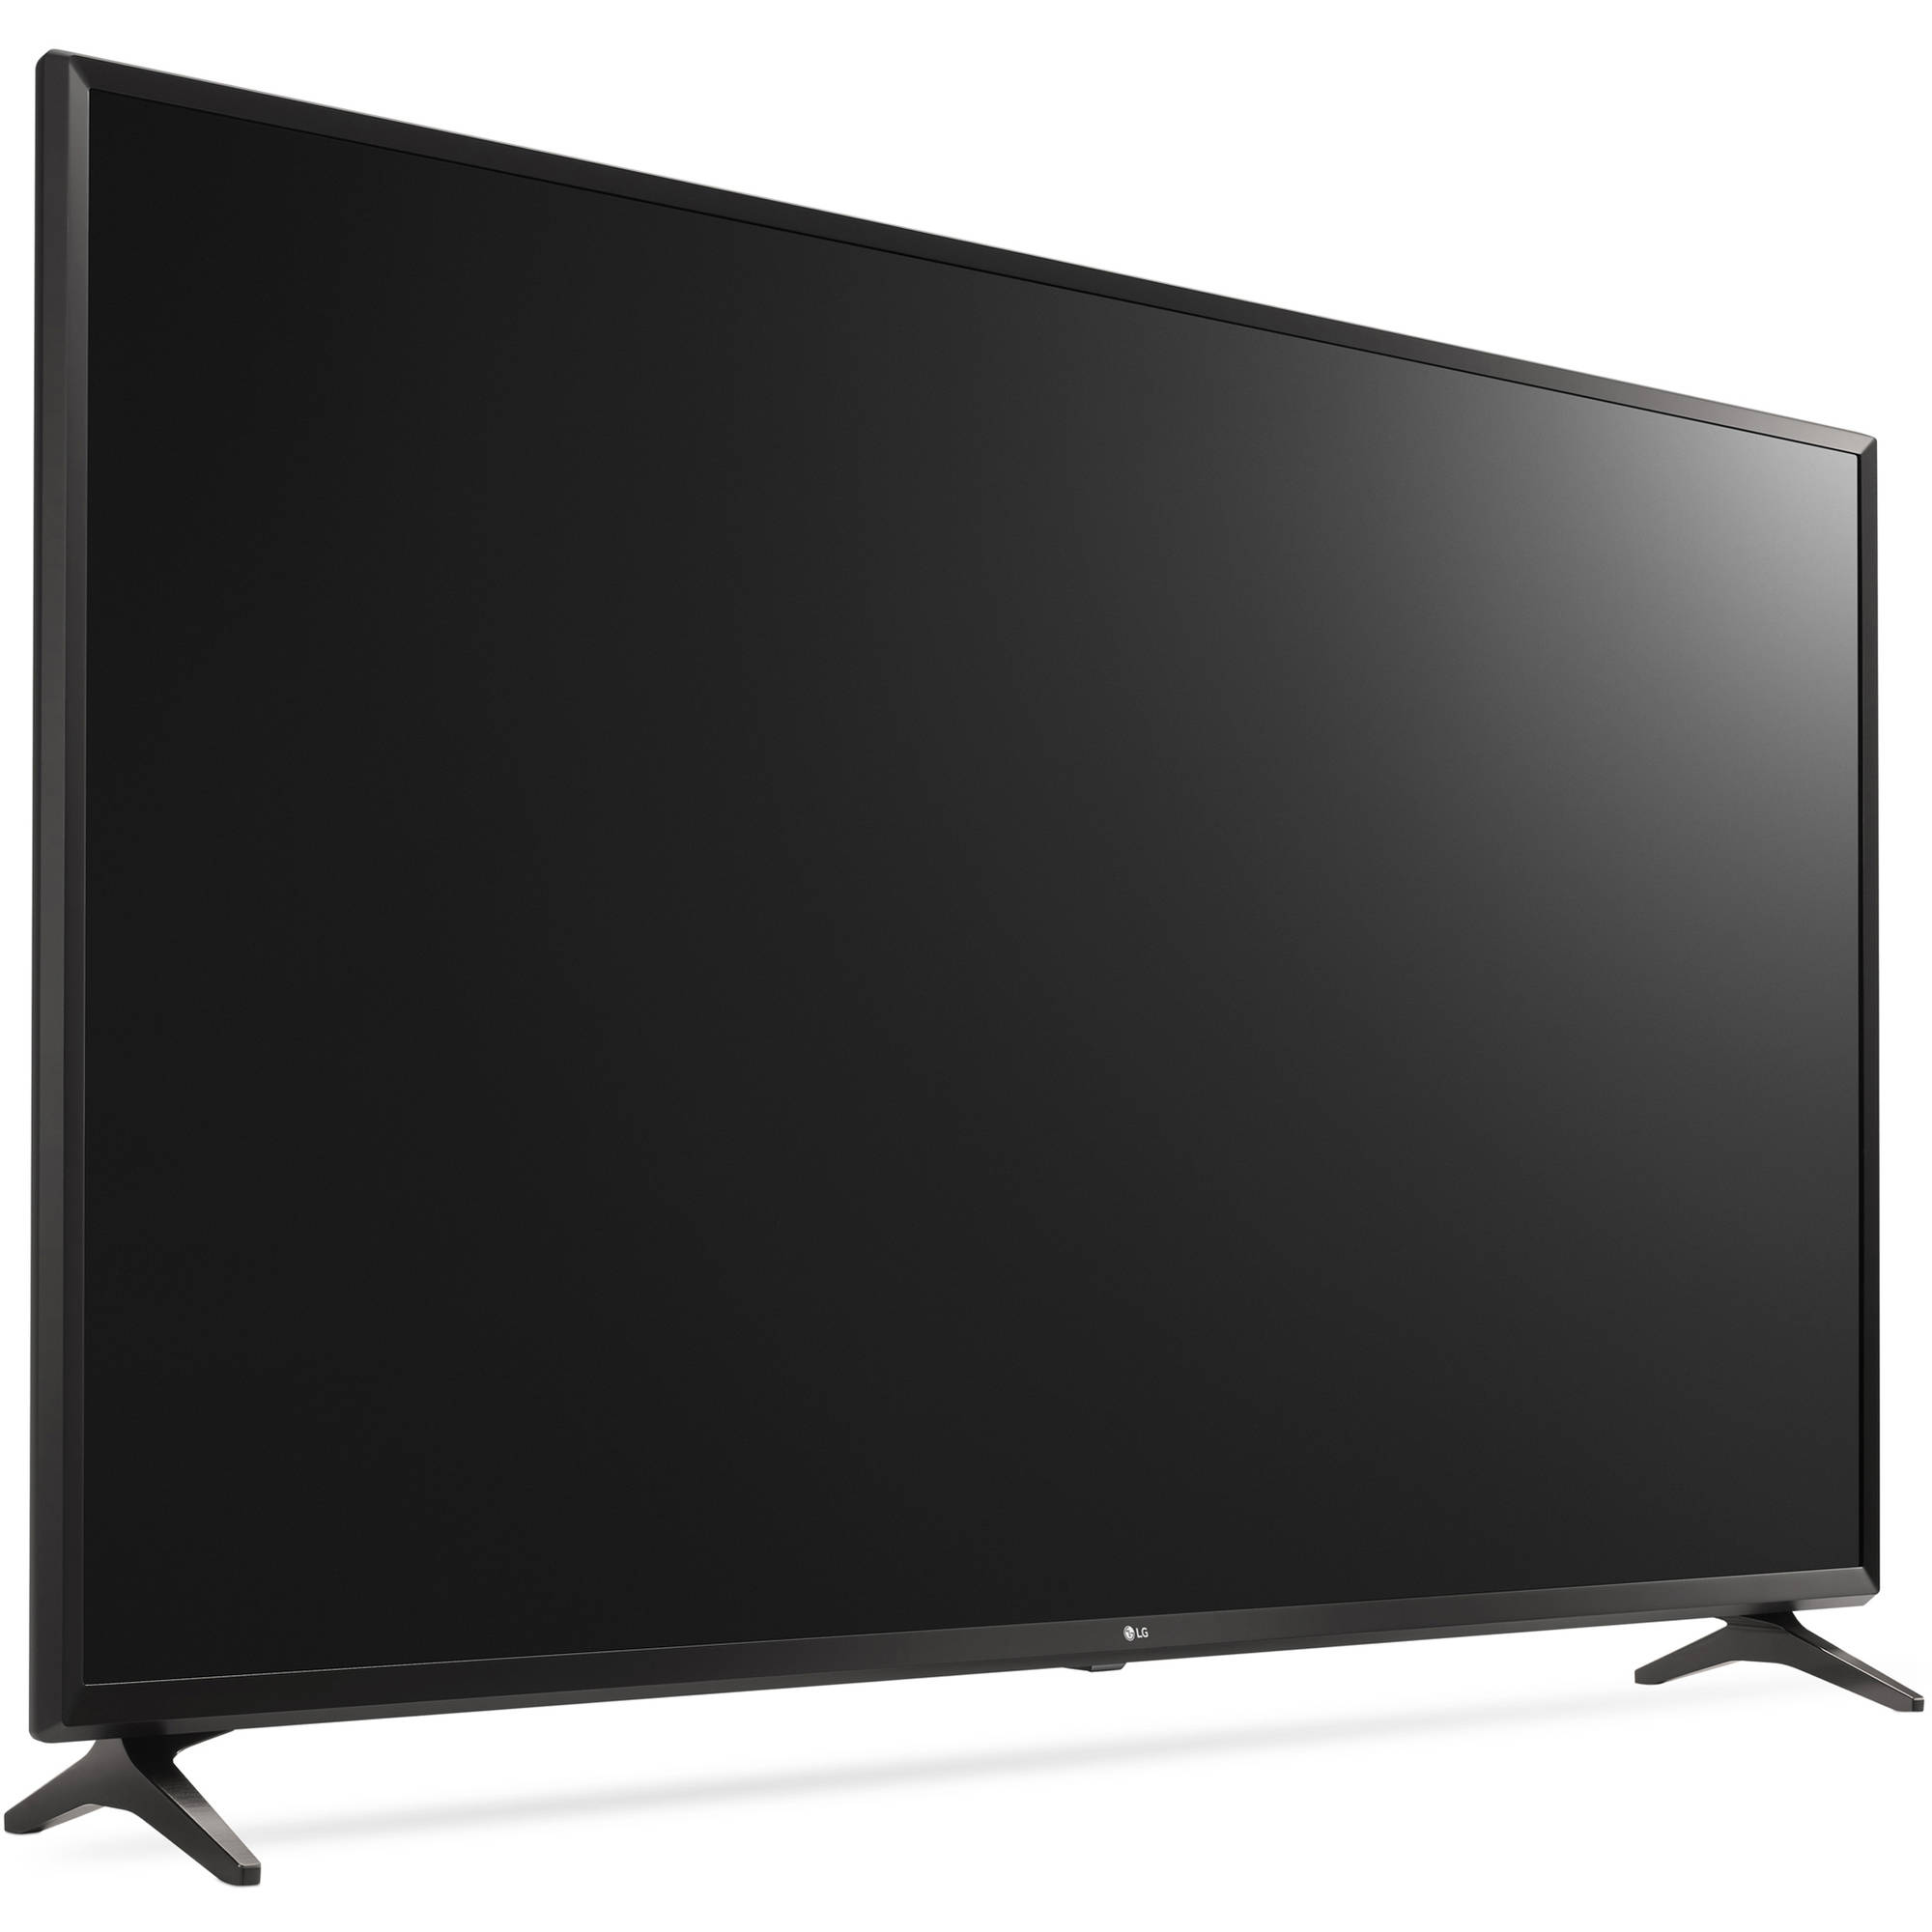 LG 49" Class 4K Ultra HD (2160P) Smart LED TV (49UJ6300) - image 5 of 12